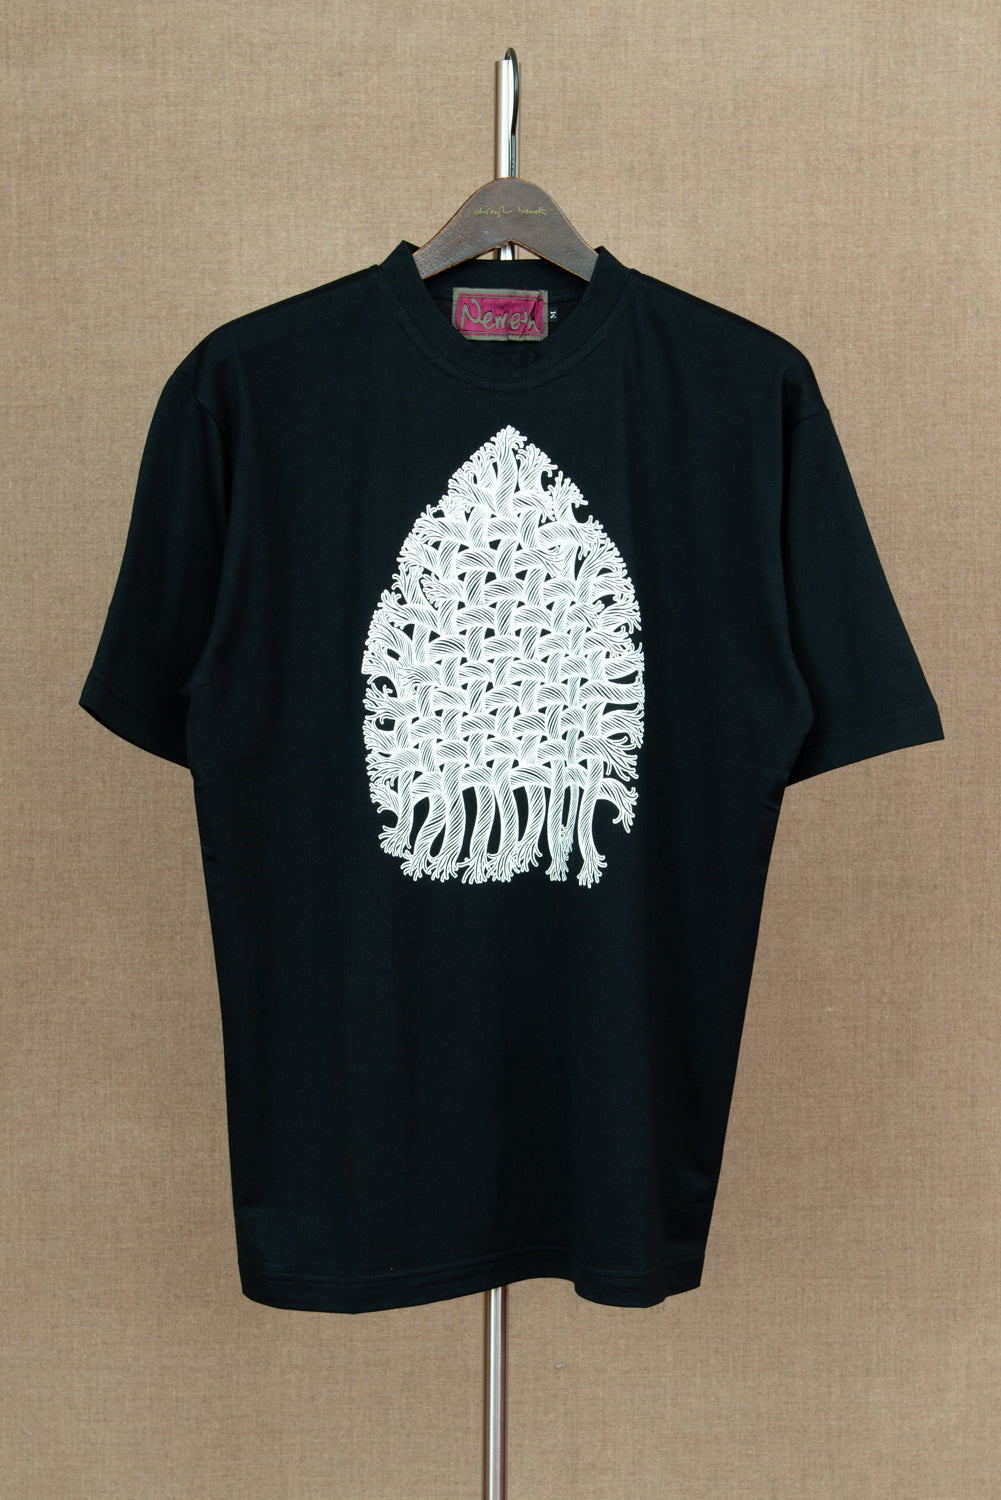 Tshirt Printed- Cotton100% Jersey- Iron Rope- Black